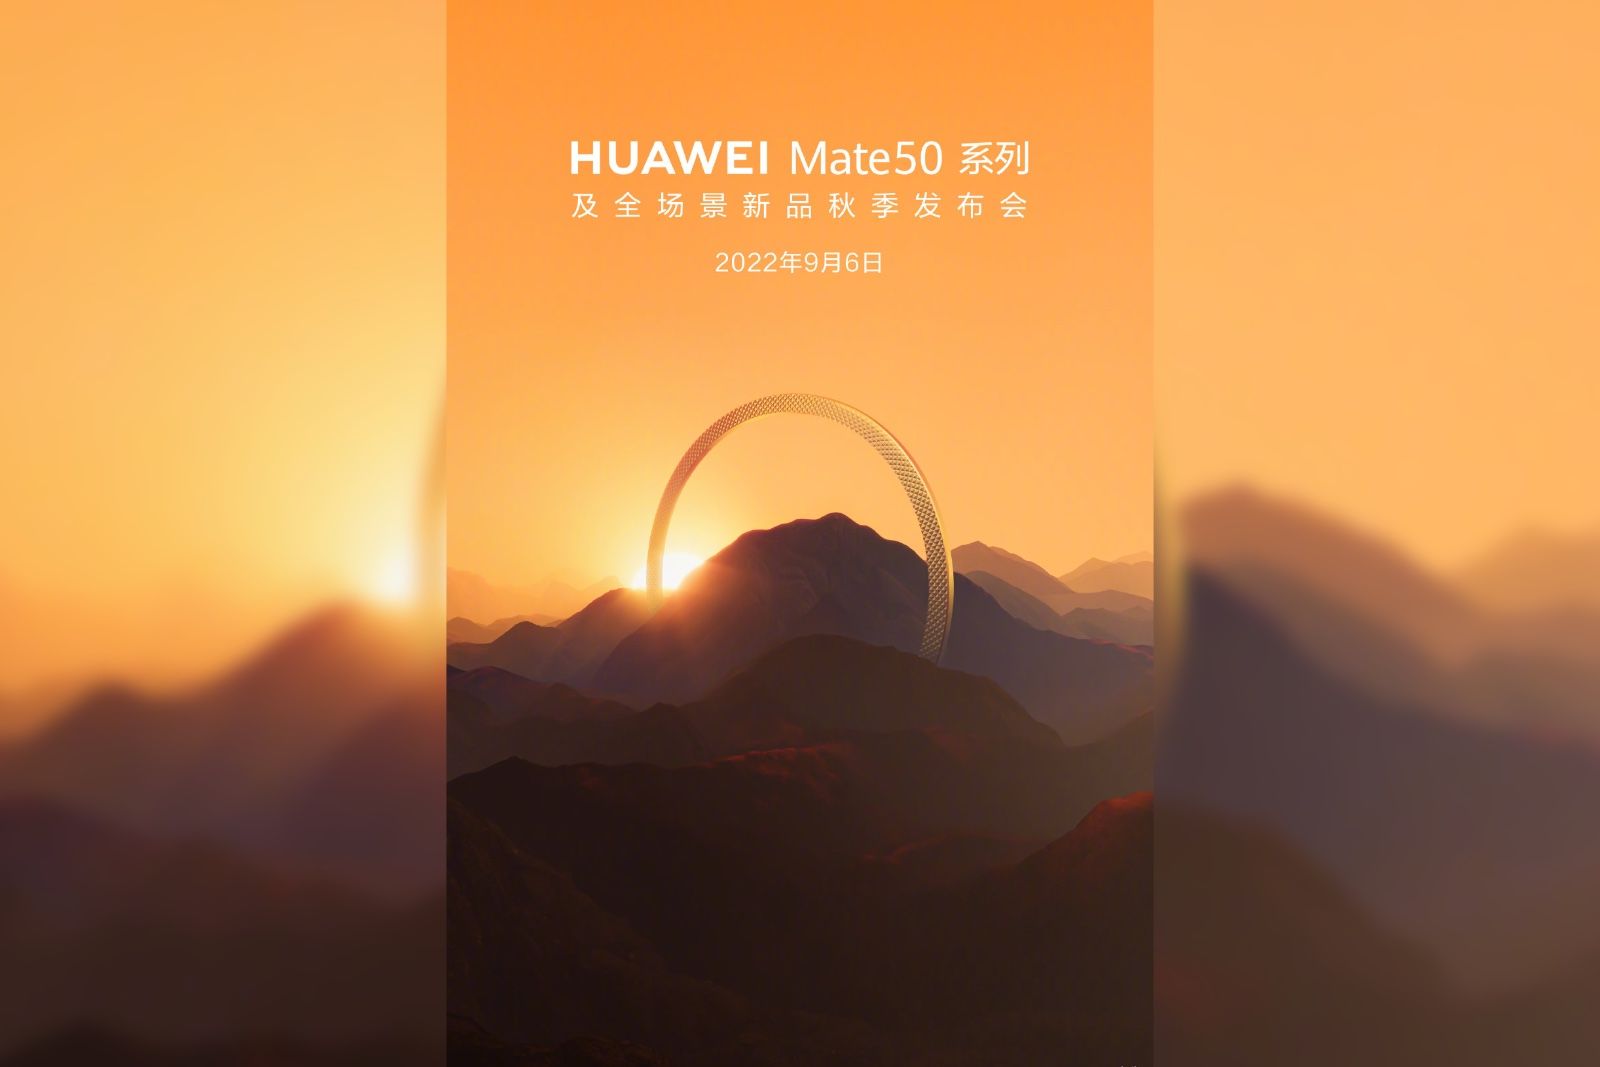 Huawei Mate 50 series launching on 6 September photo 2